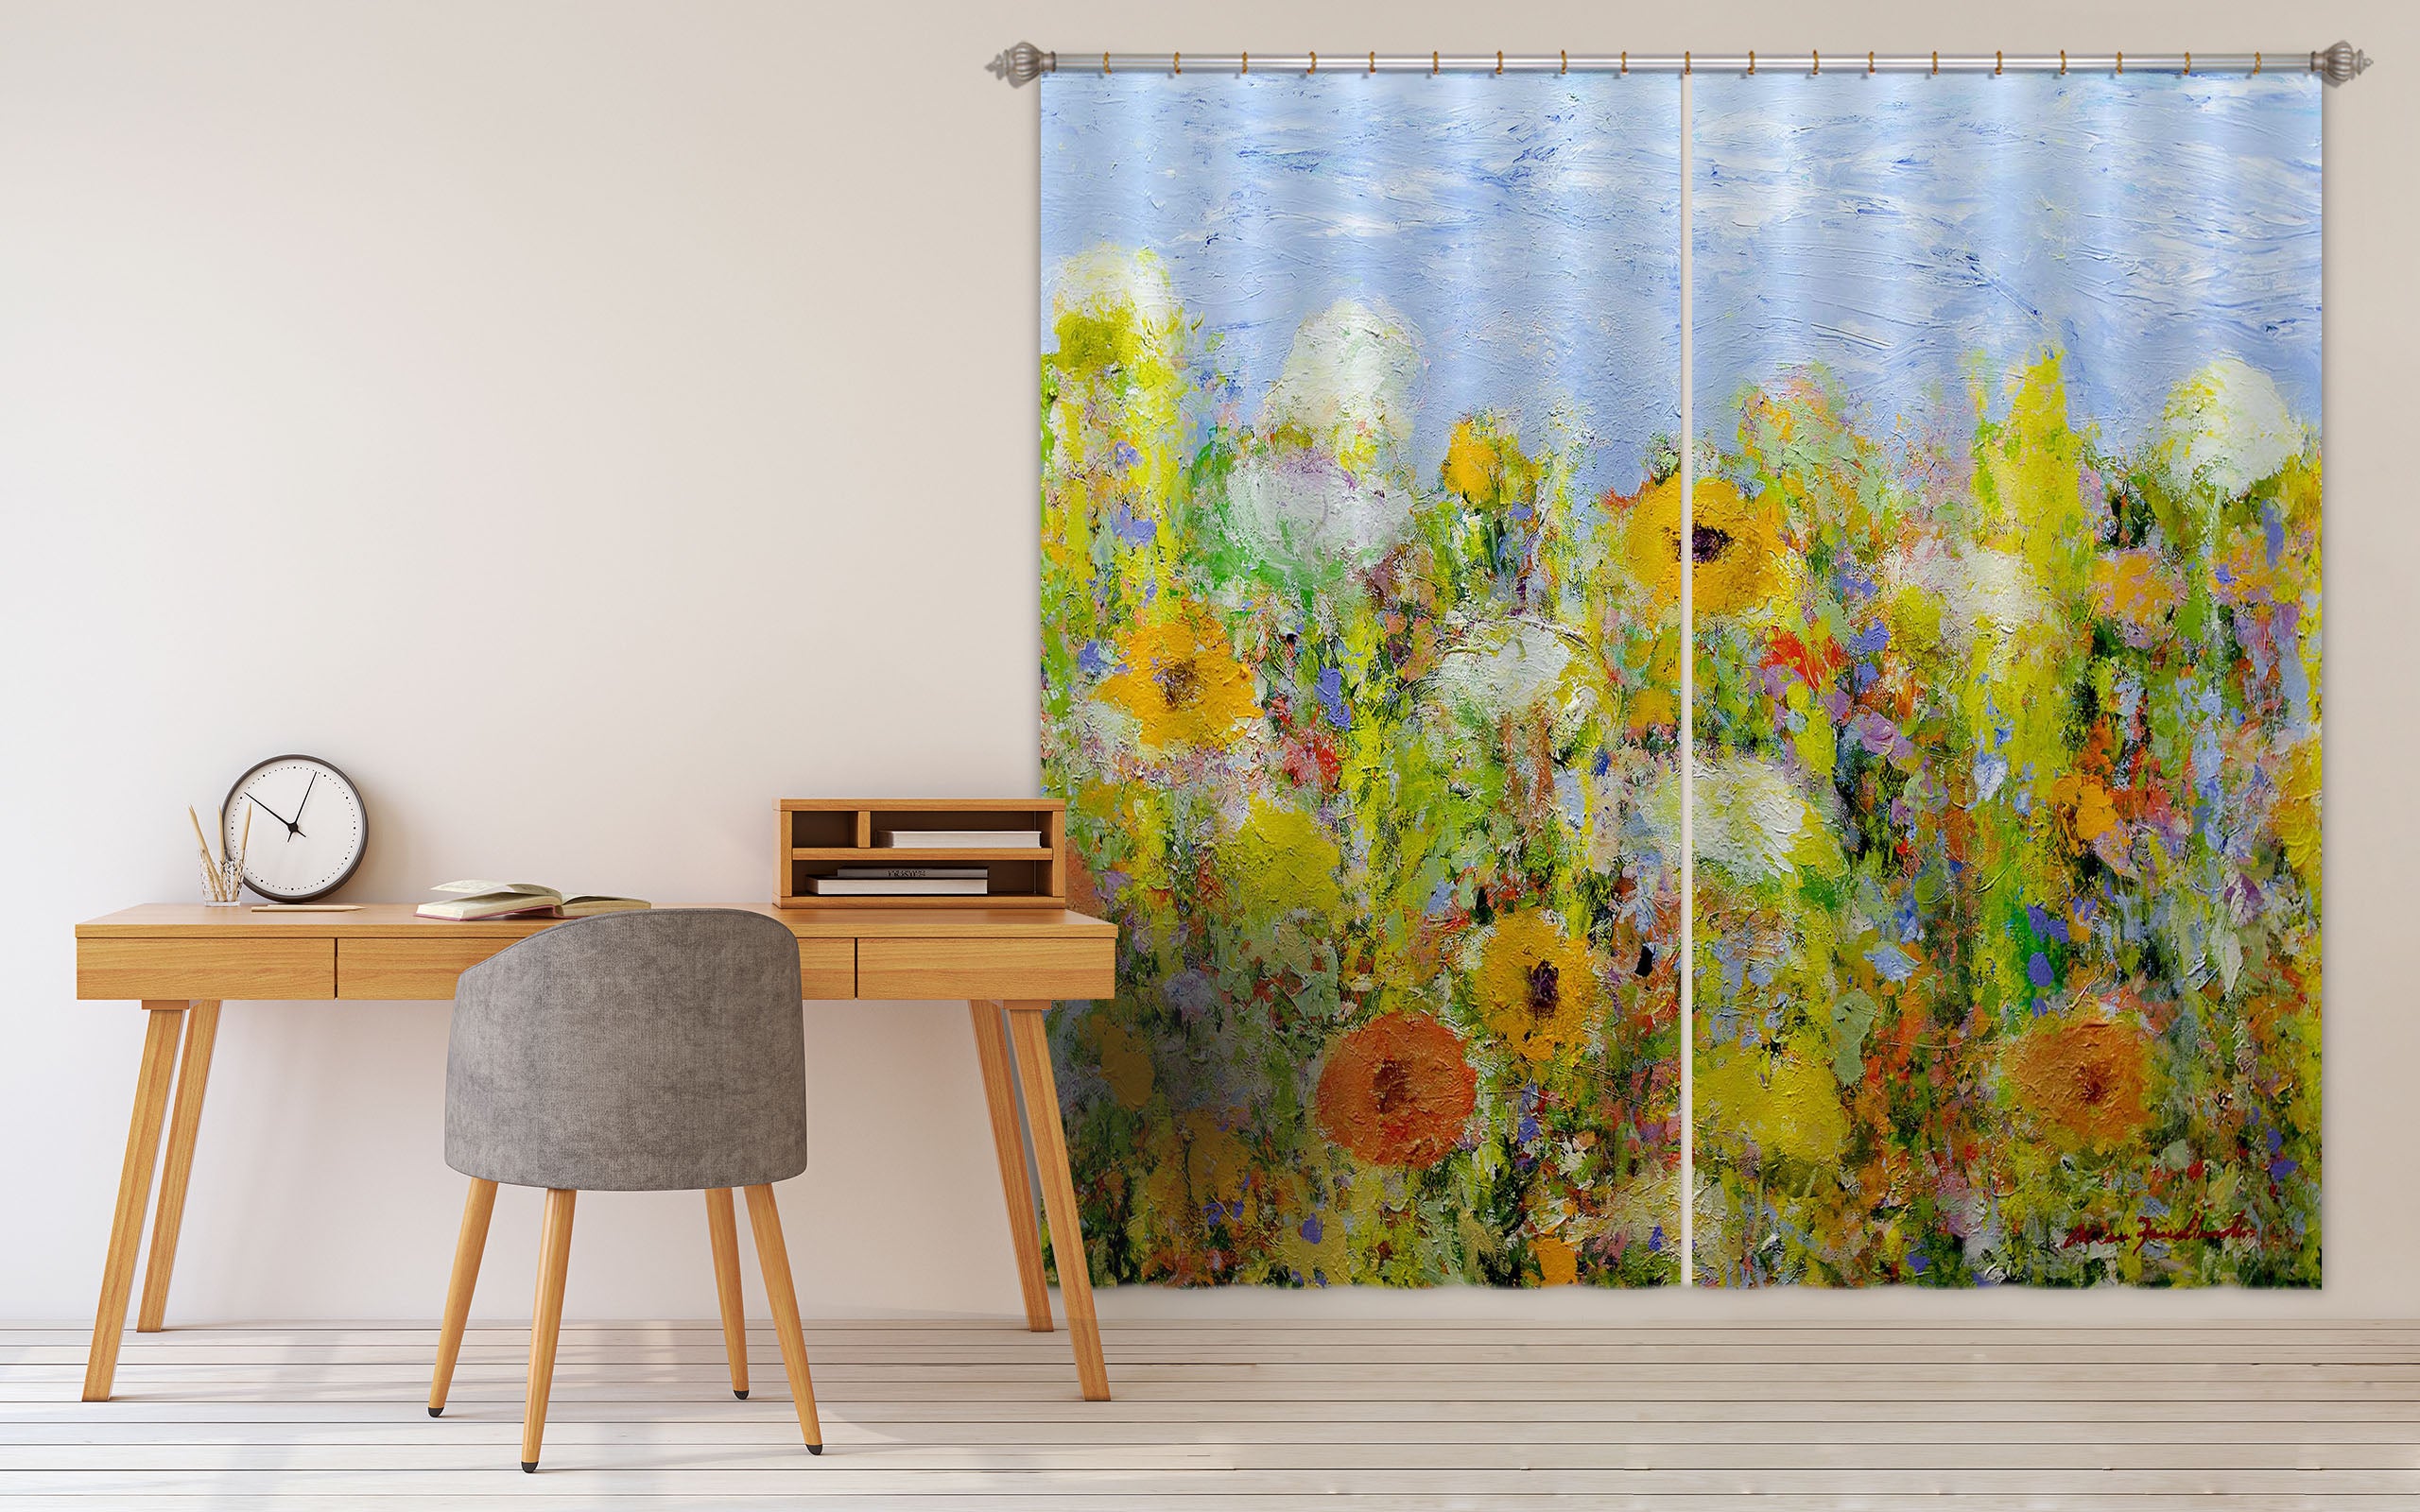 3D Colored Flowers 271 Allan P. Friedlander Curtain Curtains Drapes